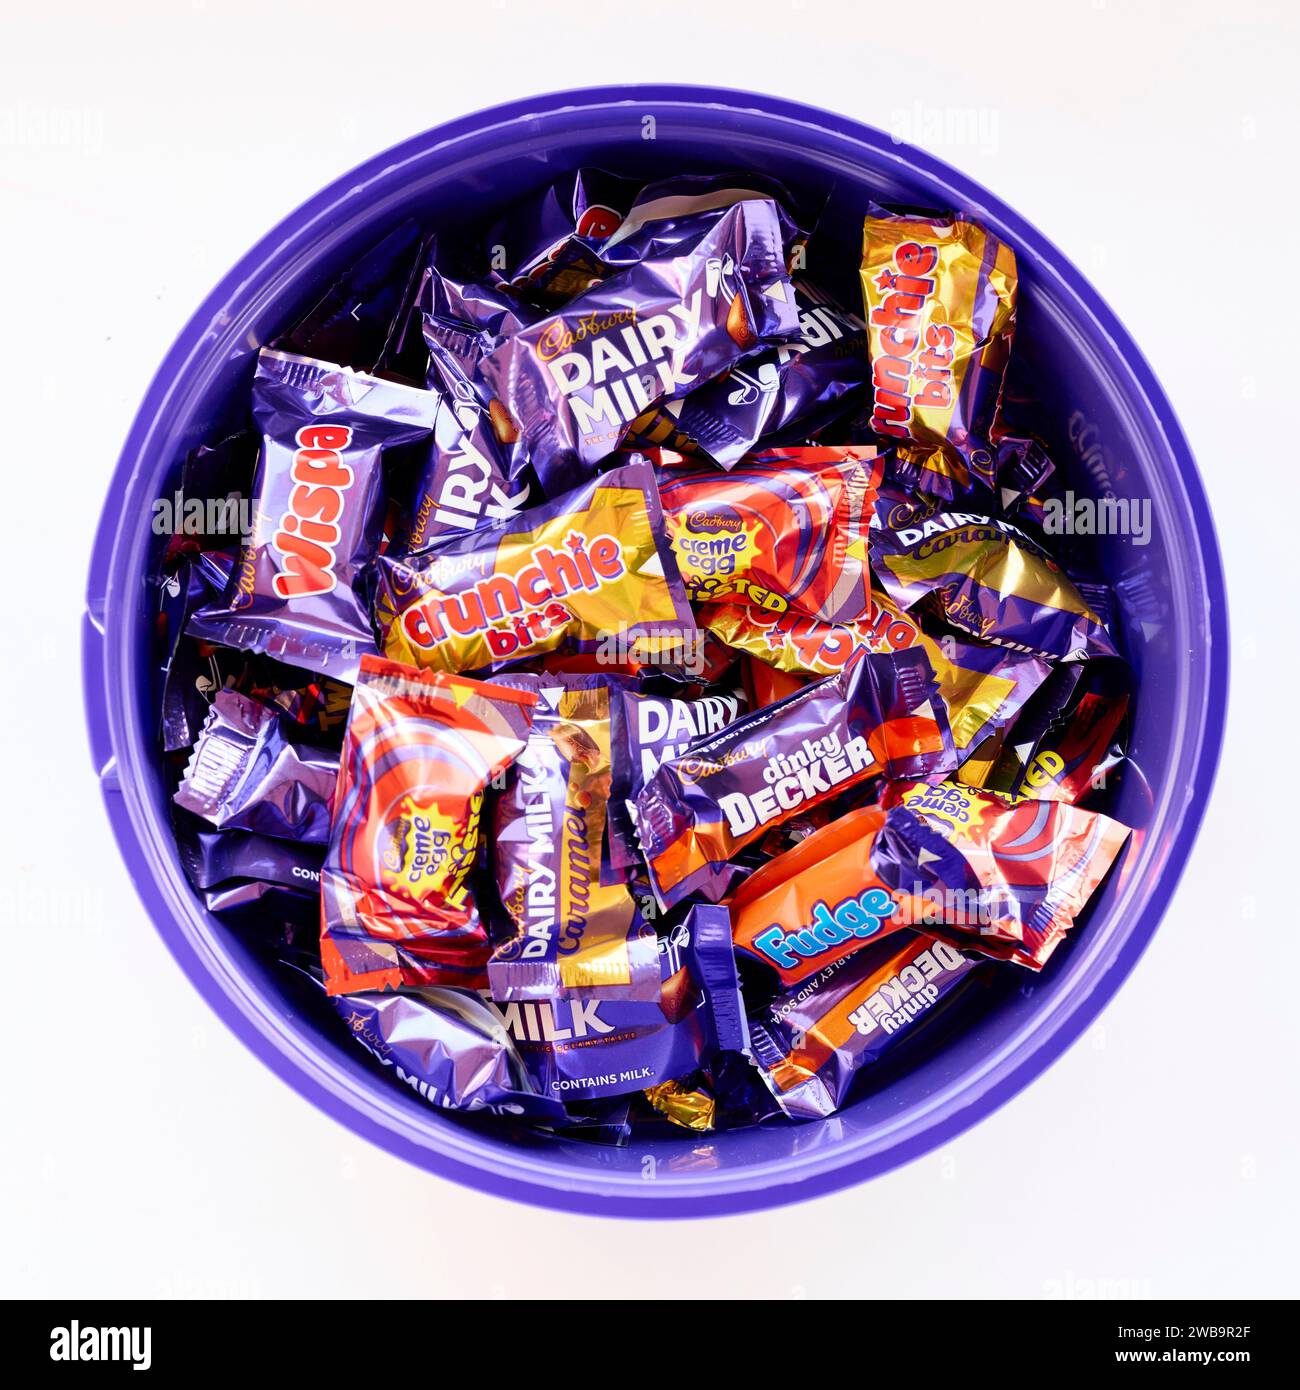 Scatola di dolci Cadbury Heroes Foto Stock